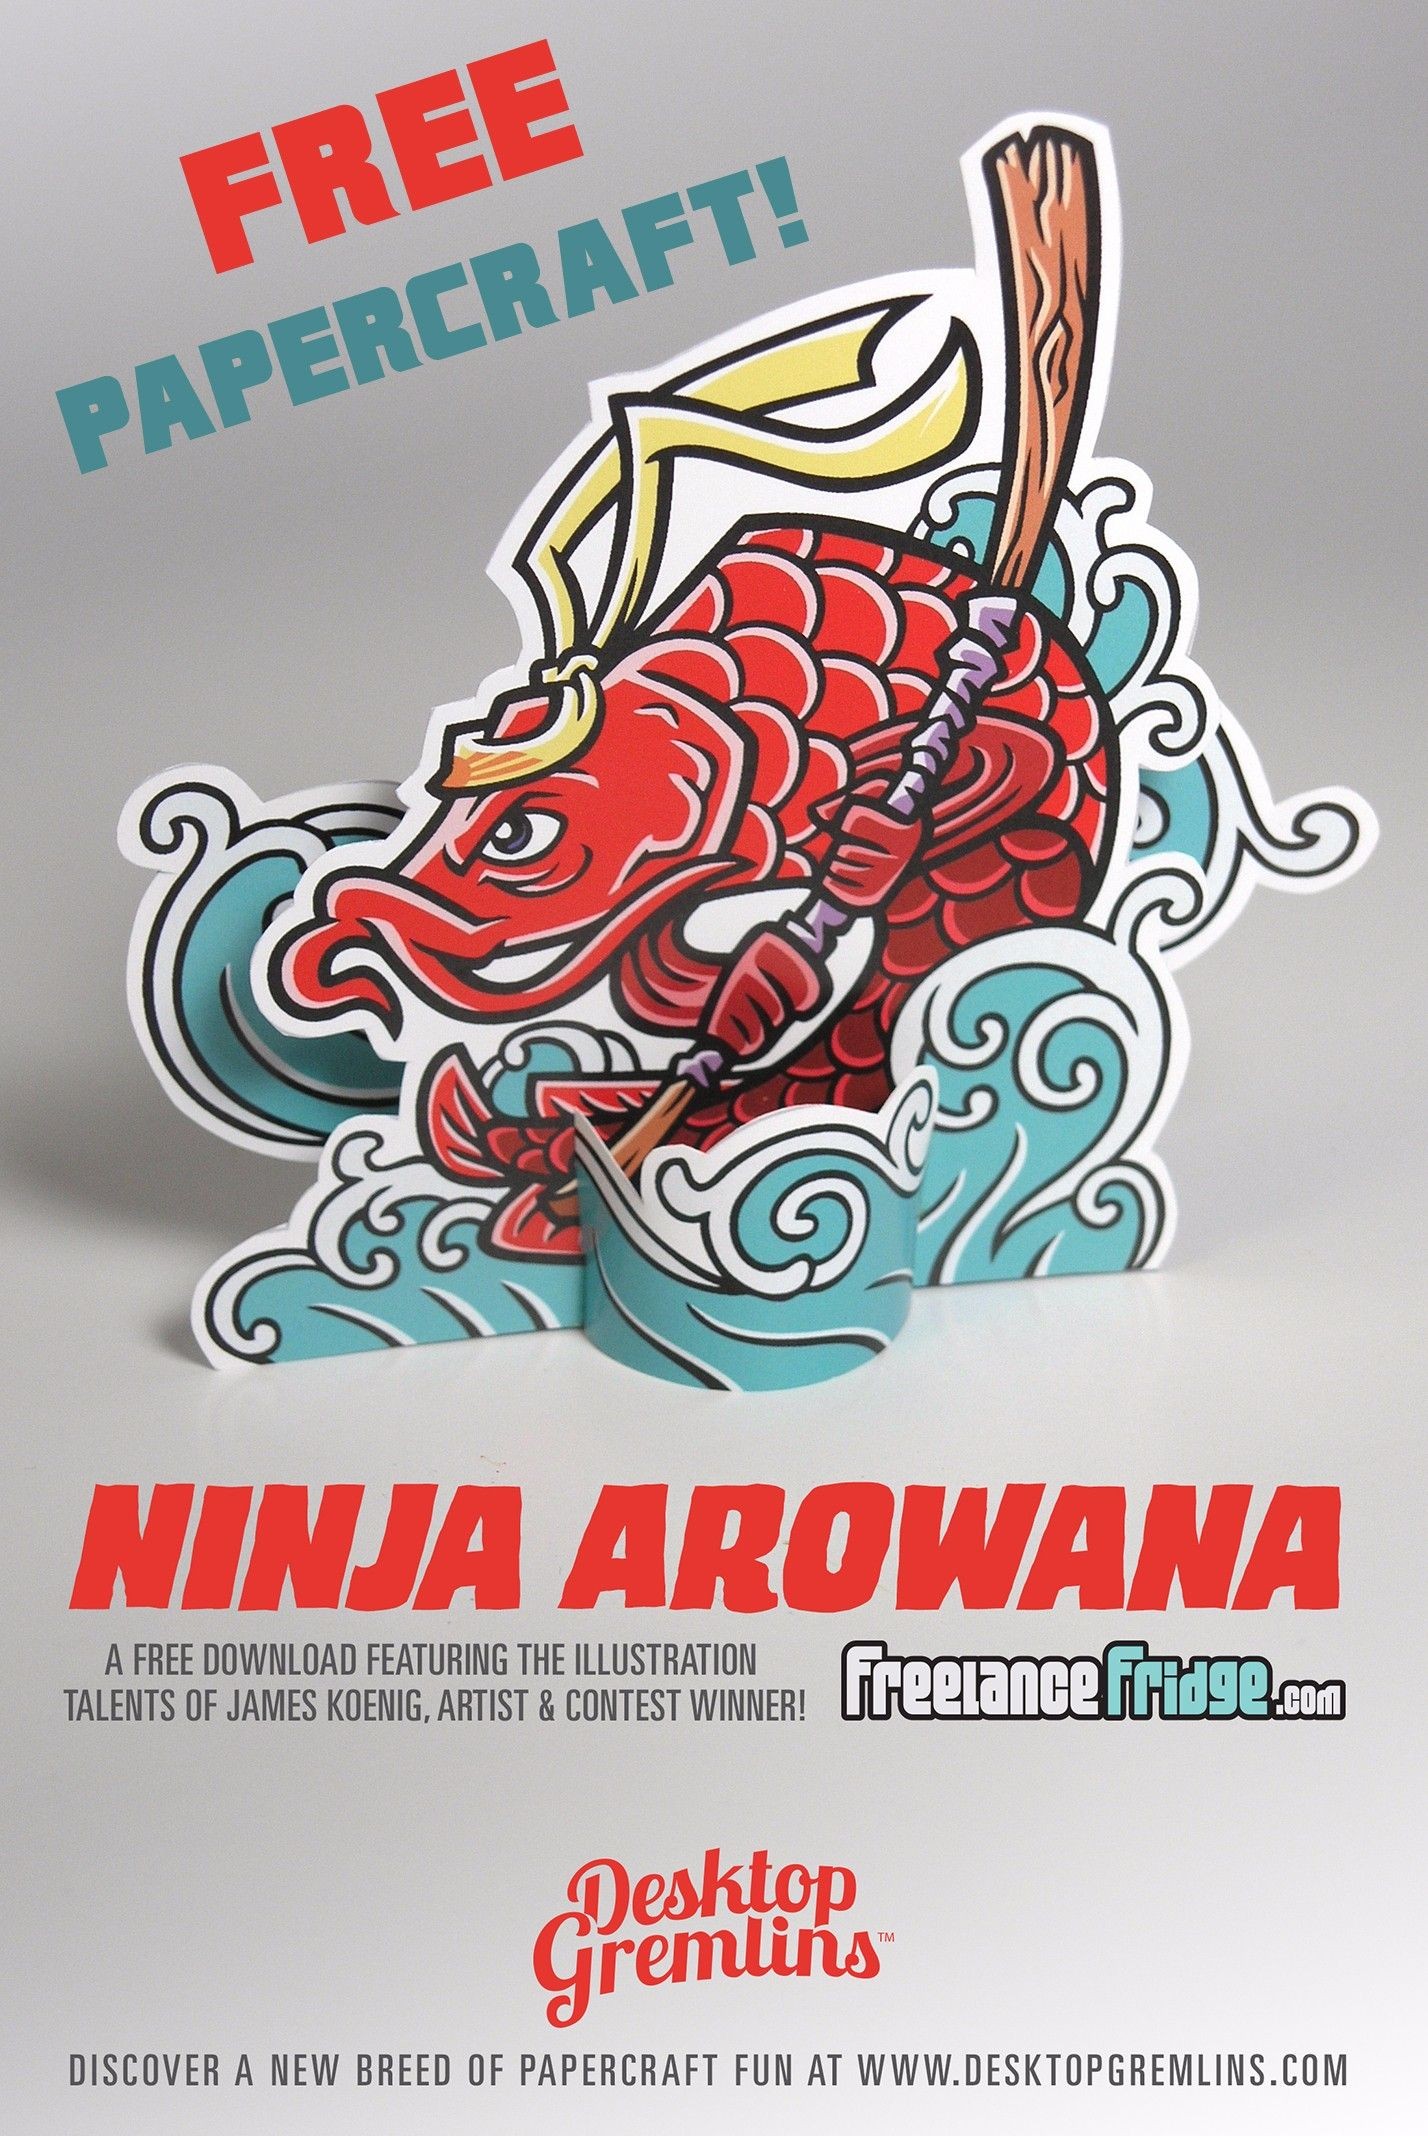 Papercraft Ninja Desktop Gremlins and Freelance Fridge Free Papercraft Hero Red Ninja